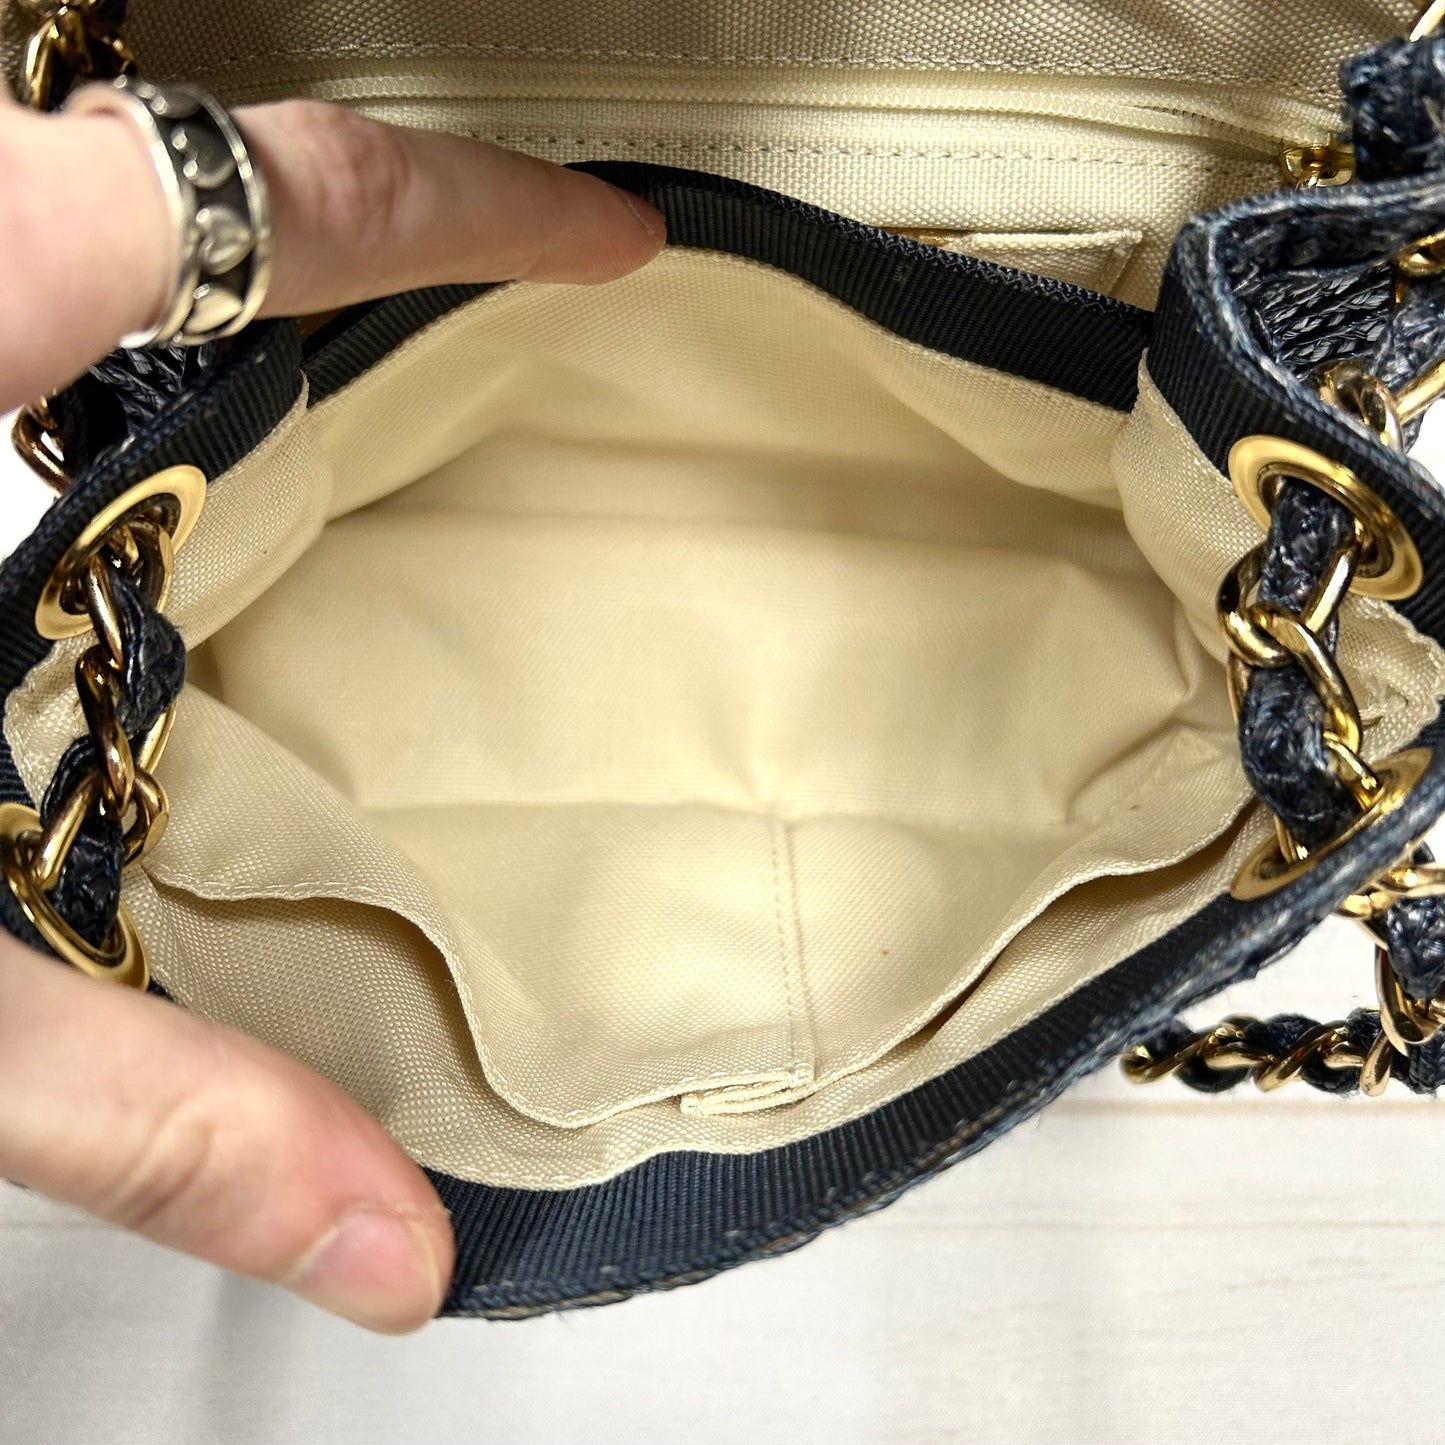 Handbag Designer By Eric Javits Size: Small